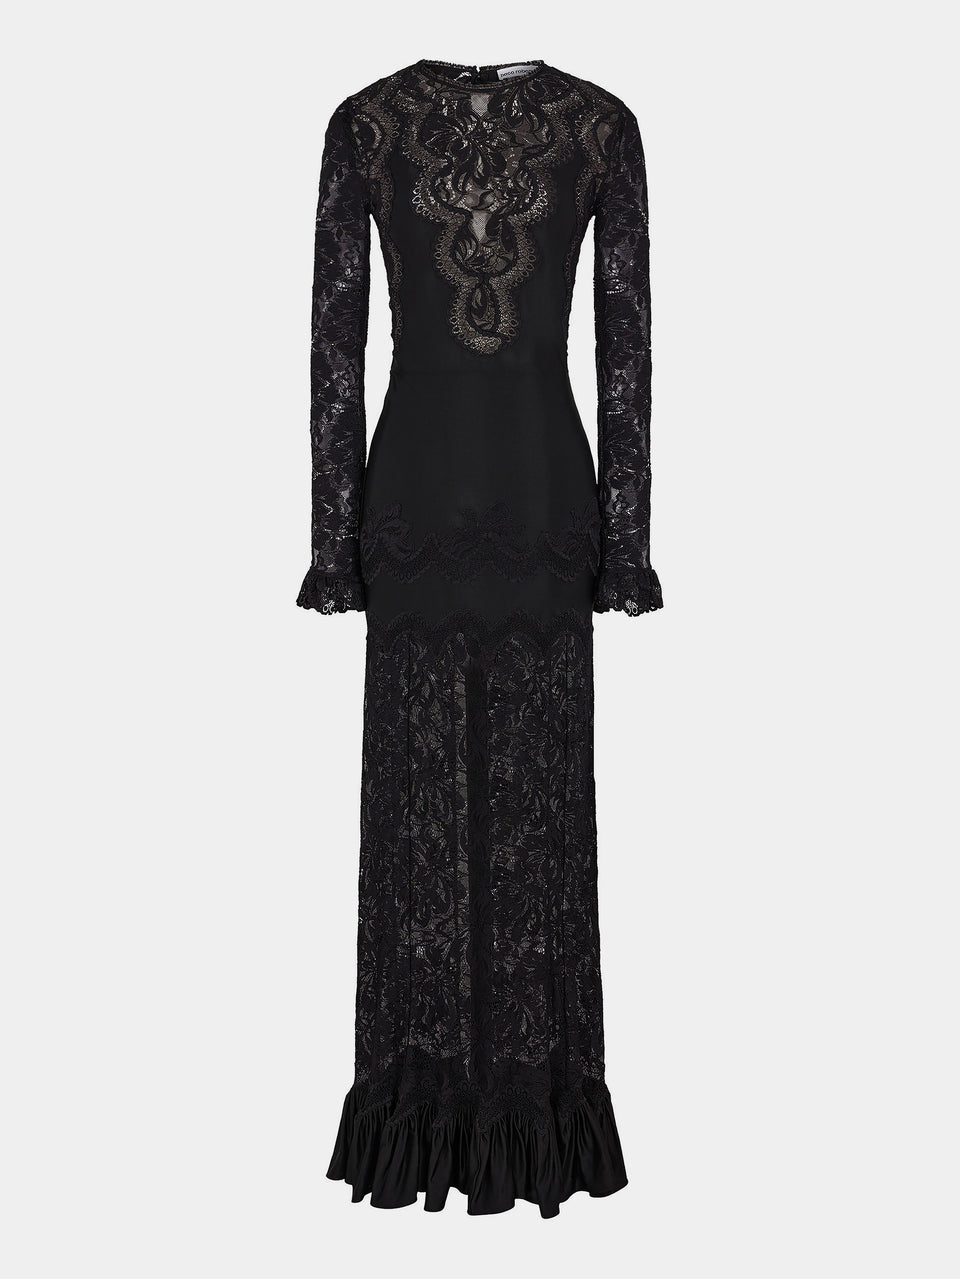 Long satin black dress in lace